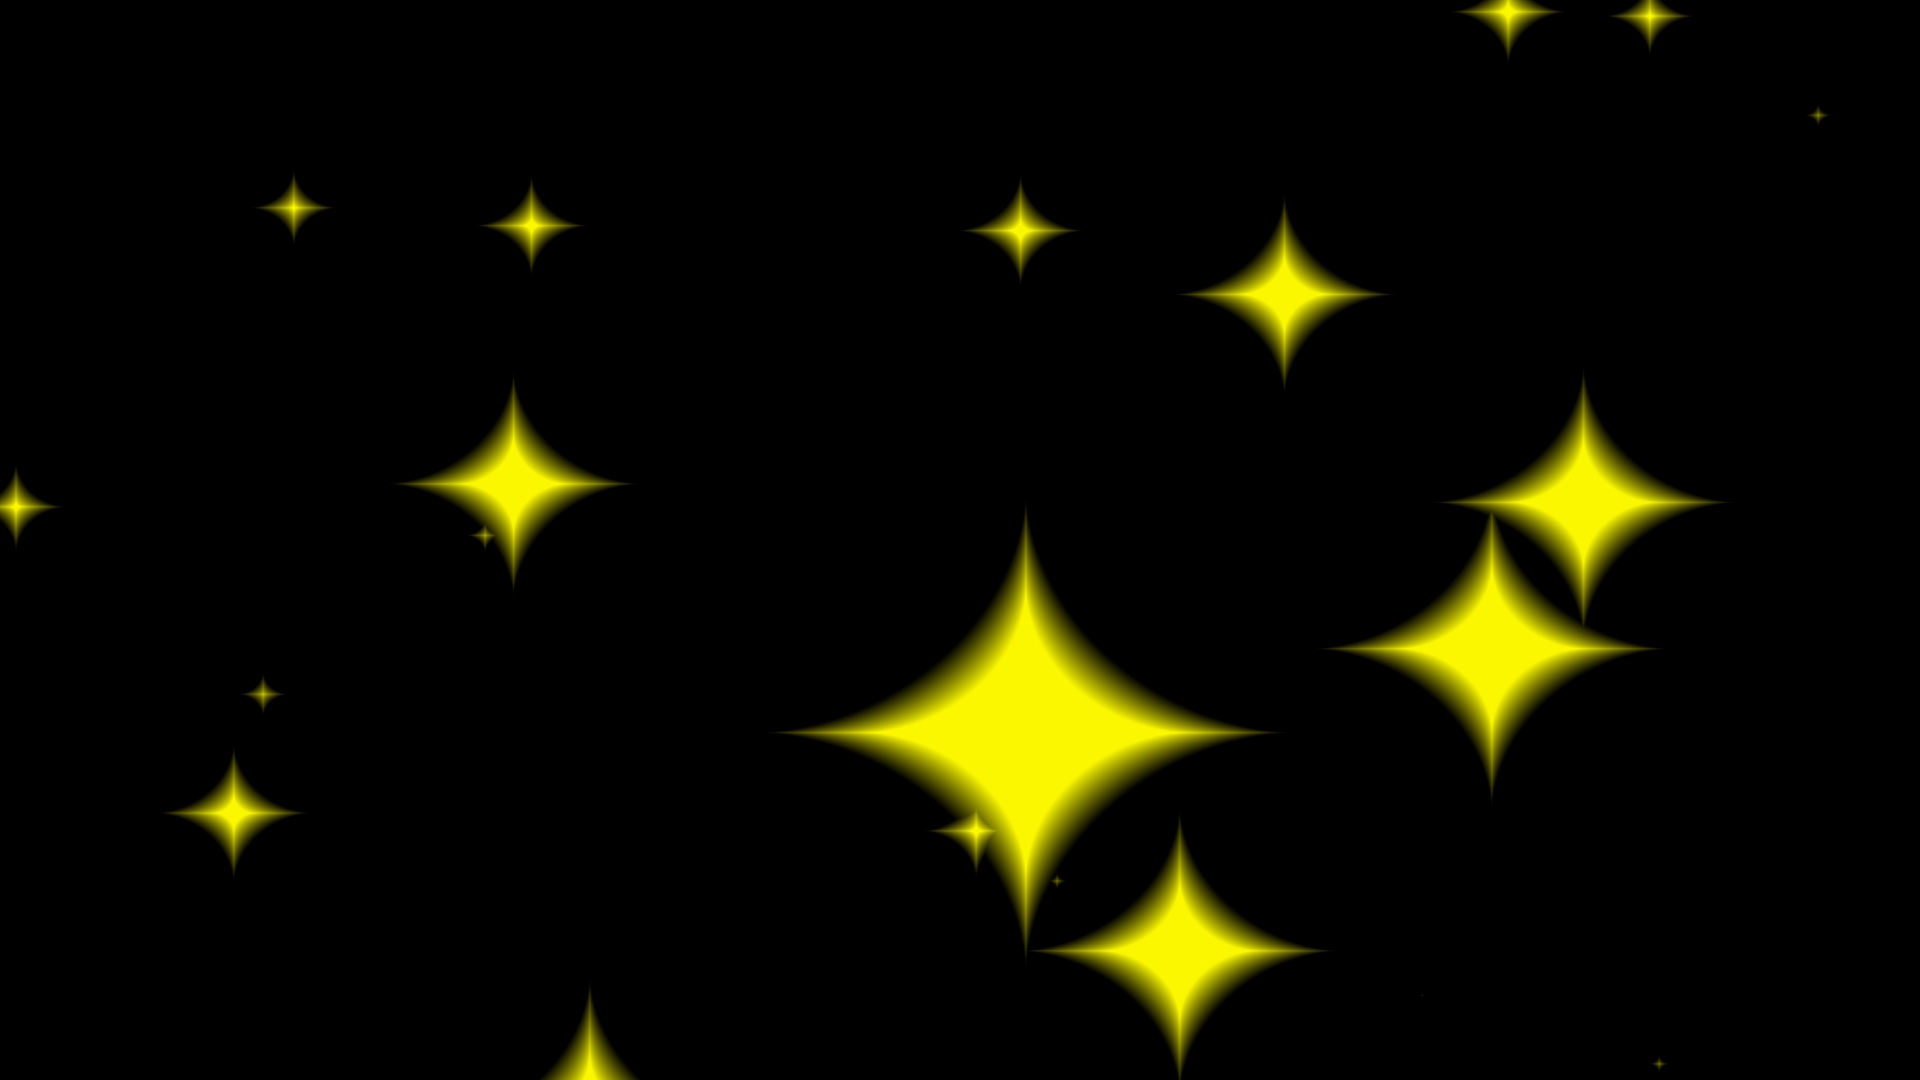 No132 たくさんの星がランダムにキラキラ・チカチカ//Stars randomly sparkle and flick